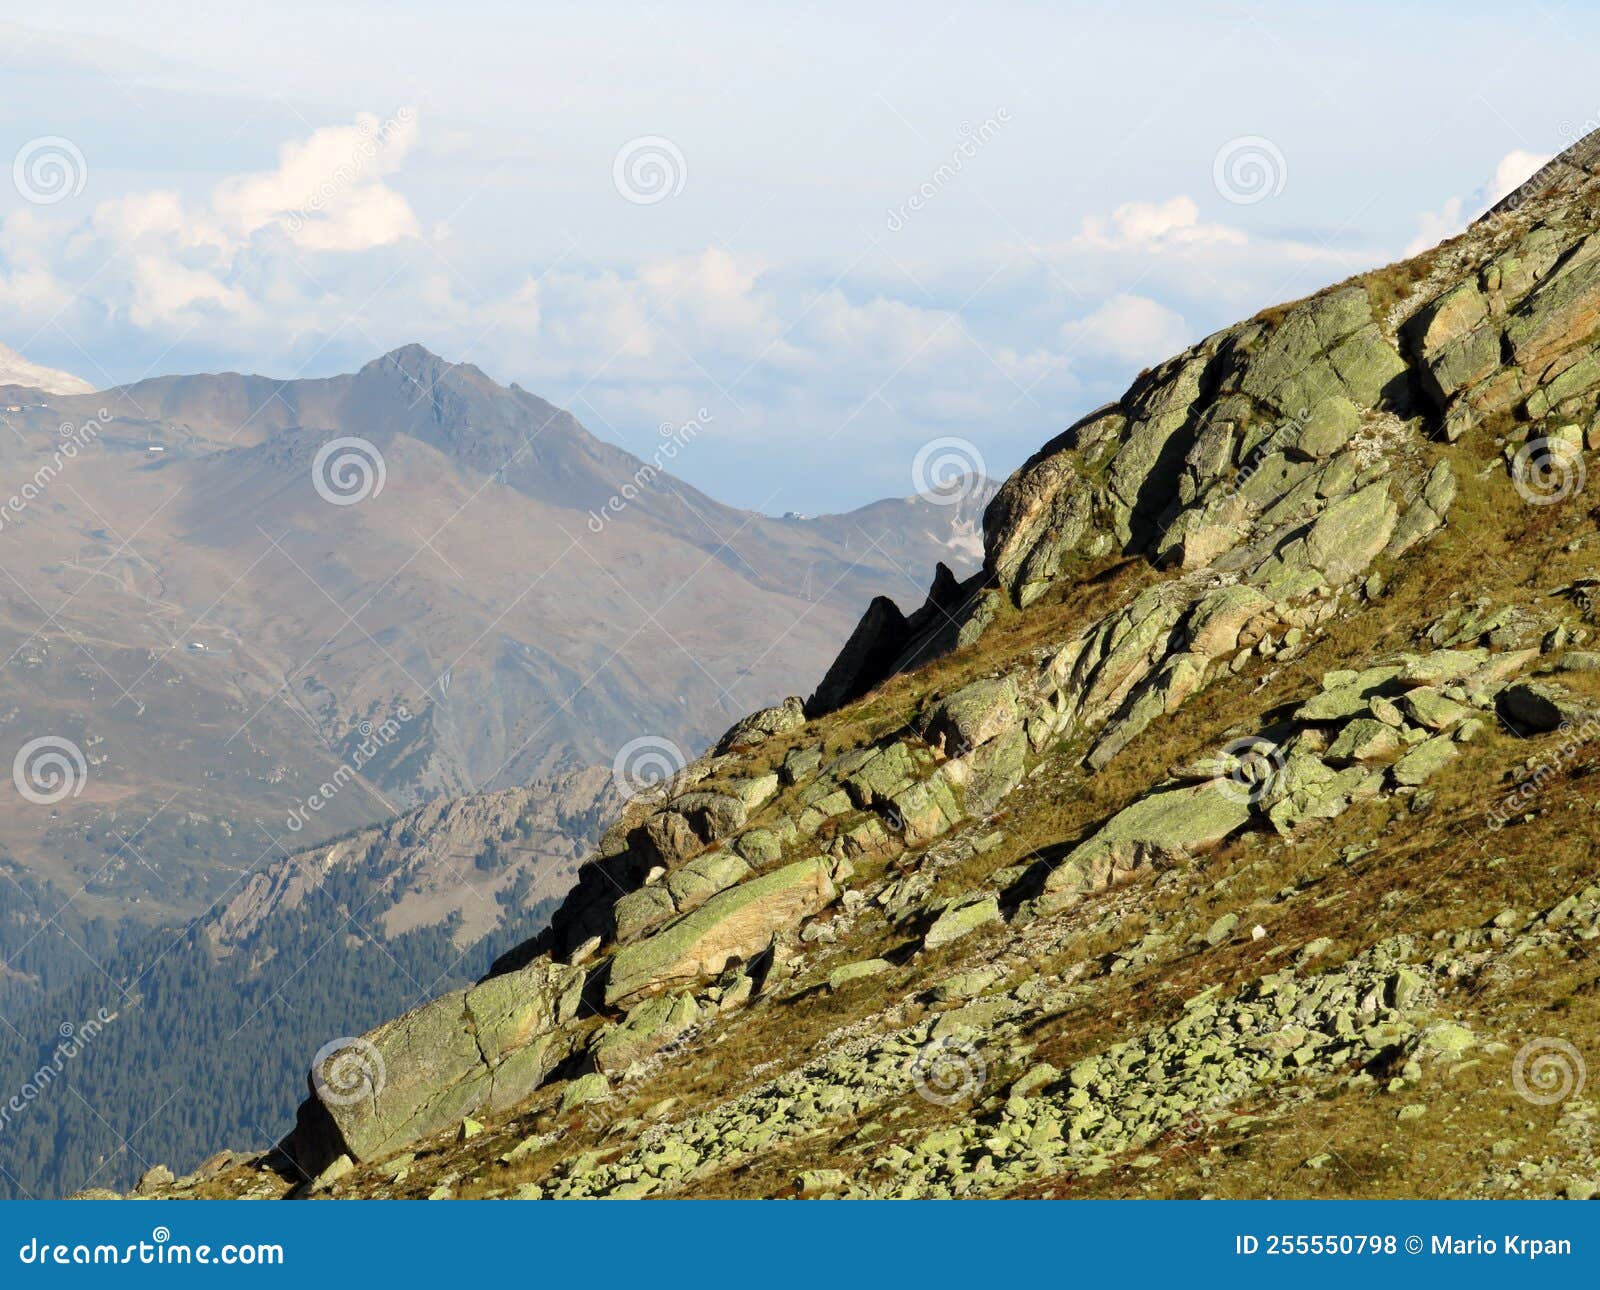 Rocks and Stones of the Silvretta Alps and Albula Alps Mountain Range ...